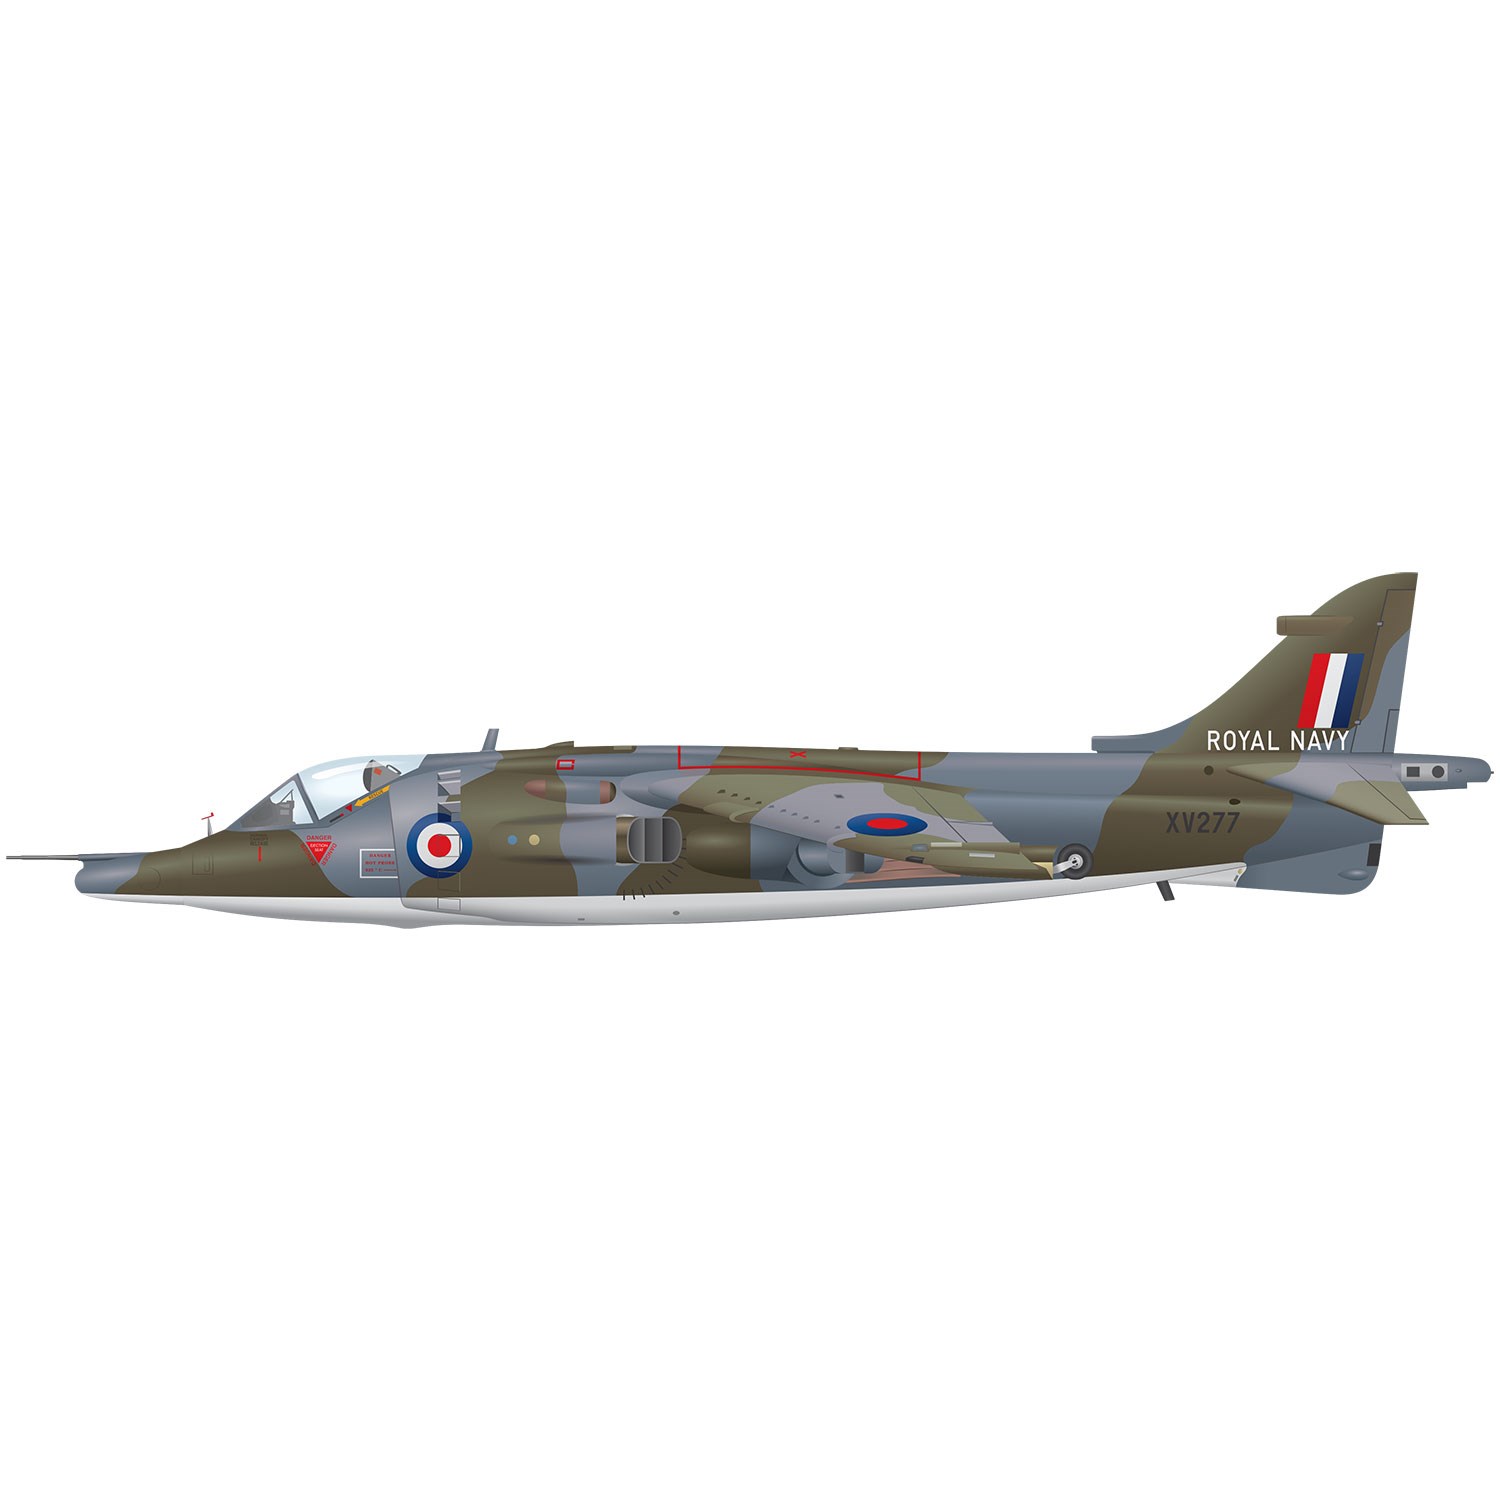 A Hawker Siddeley Harrier combat aircraft. 